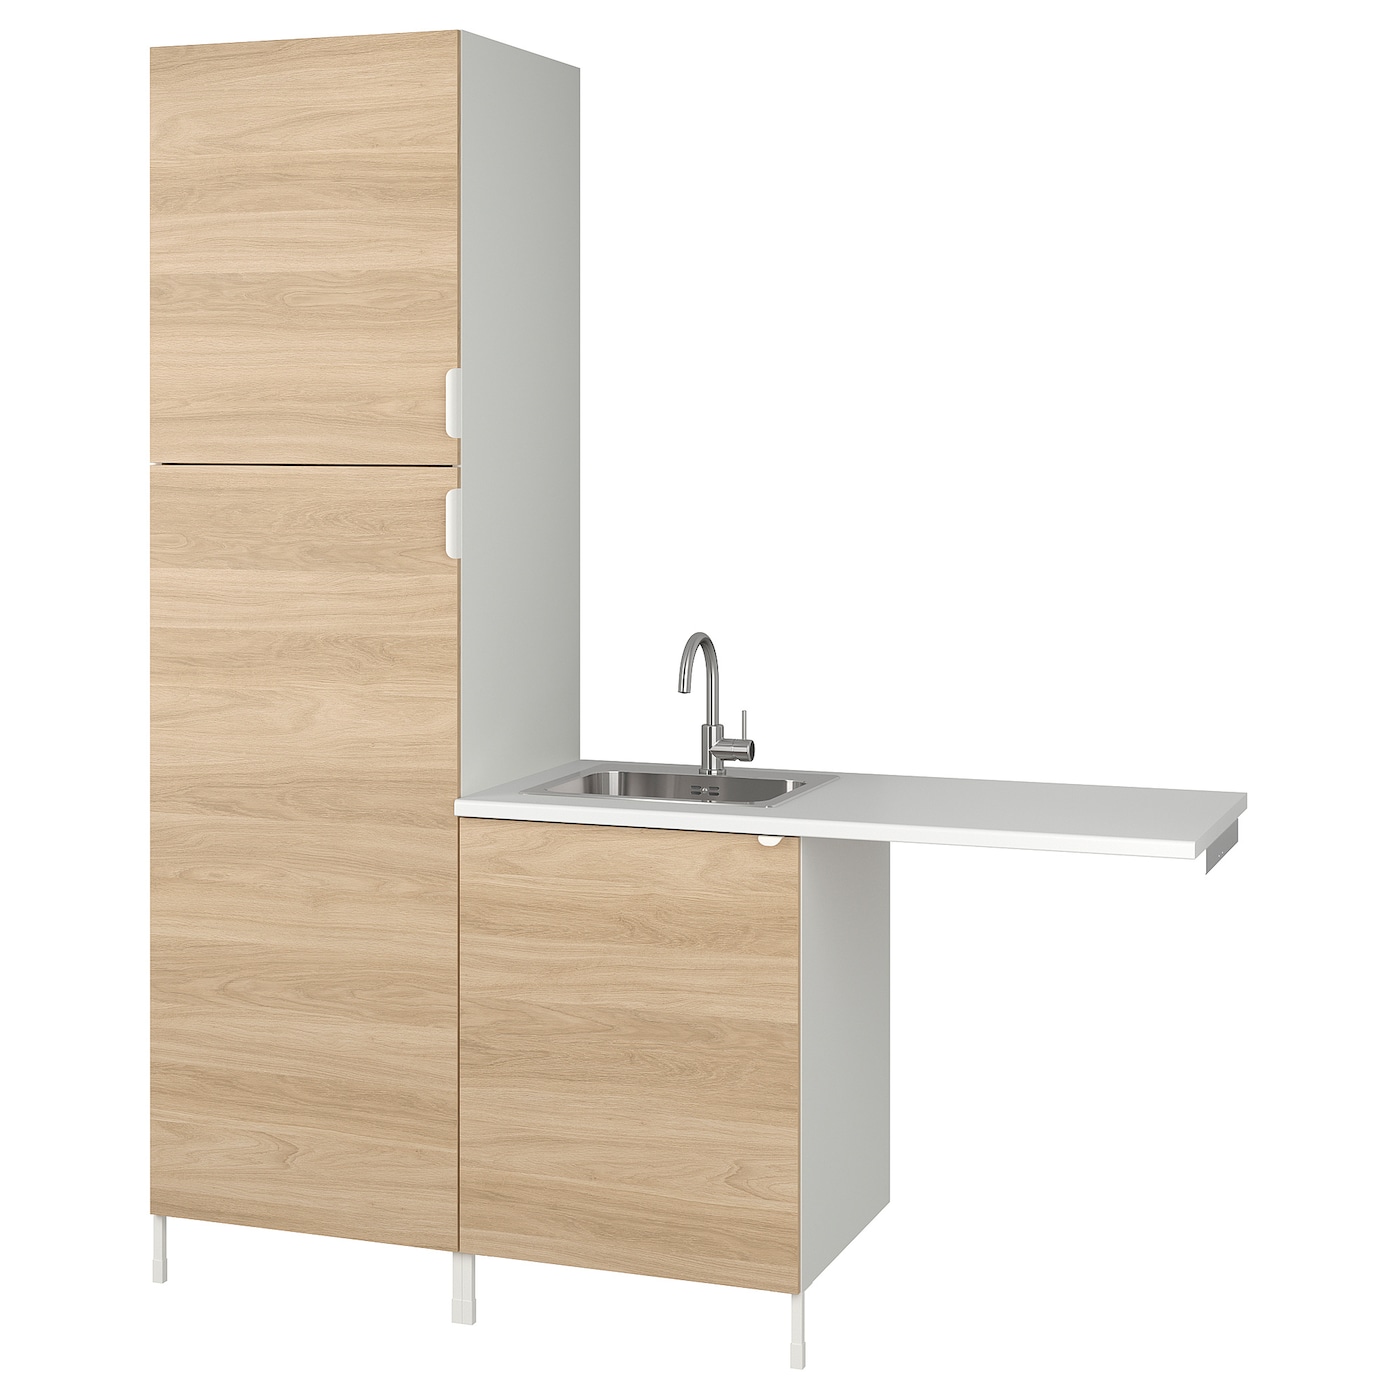 Комбинация для ванной - IKEA ENHET,  183х63.5х222.5 см, белый/имитация дуба, ЭНХЕТ ИКЕА